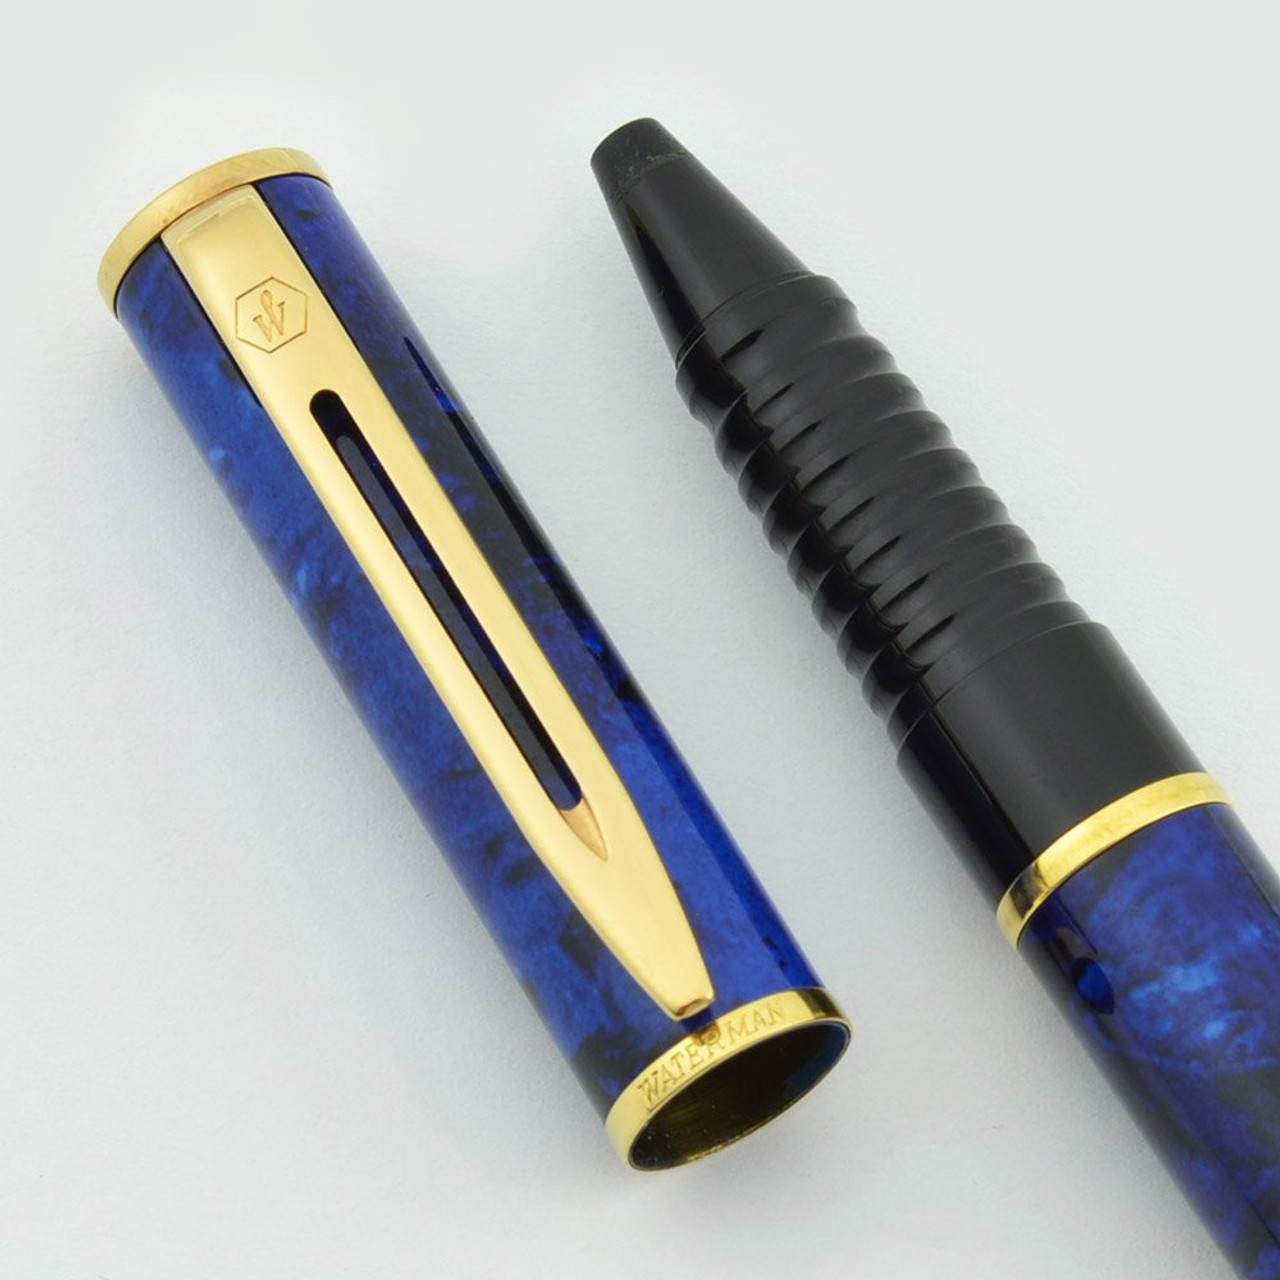 Waterman Laureat II Rollerball Pen - Blue Marble & Black (New Old Stock)